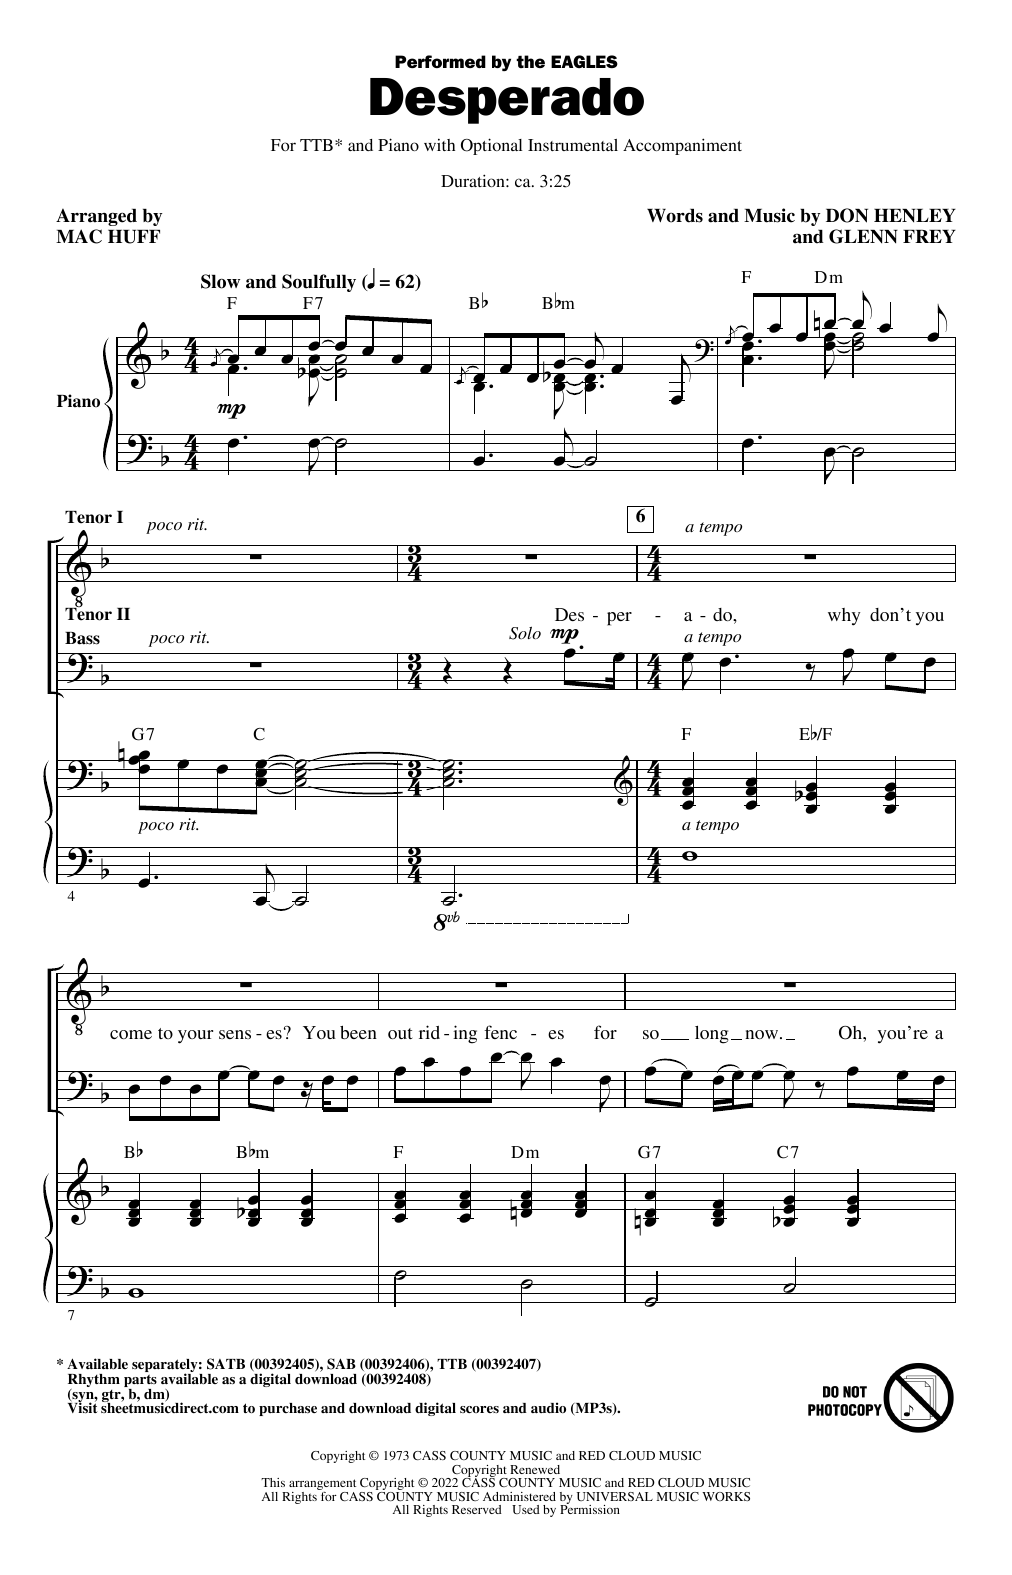 Eagles Desperado (arr. Mac Huff) Sheet Music Notes & Chords for SATB Choir - Download or Print PDF